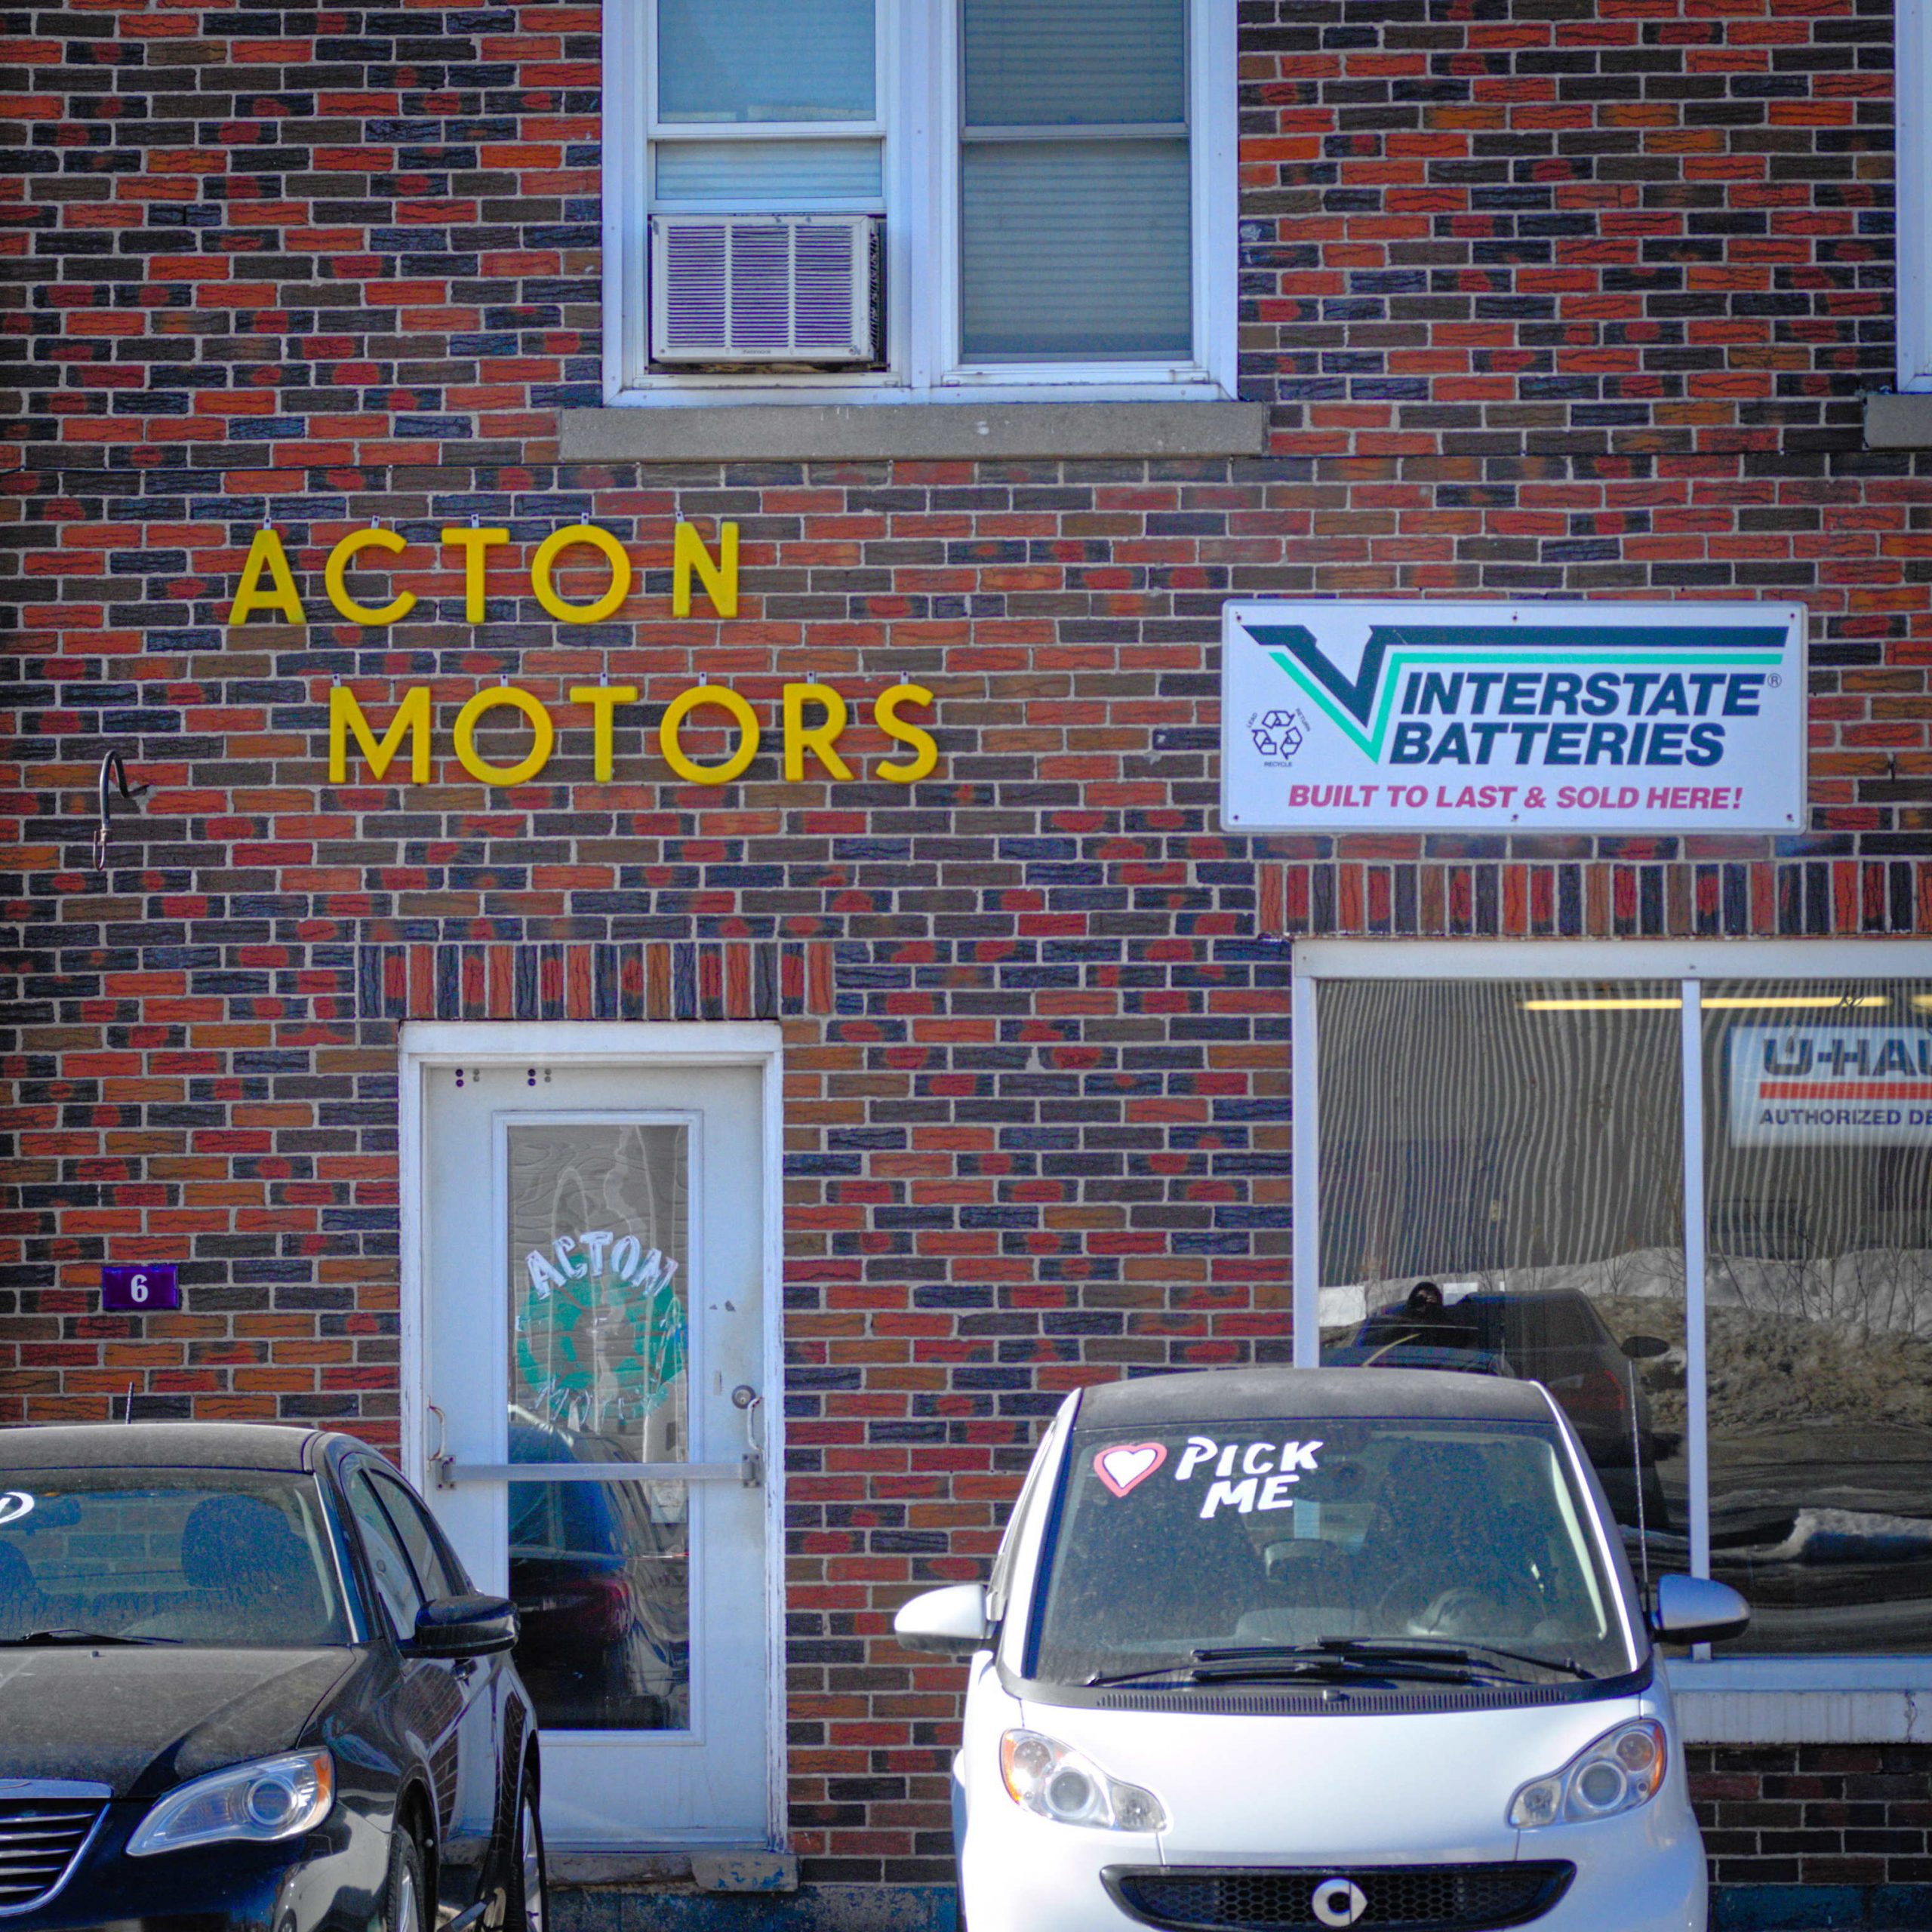 Acton Motors